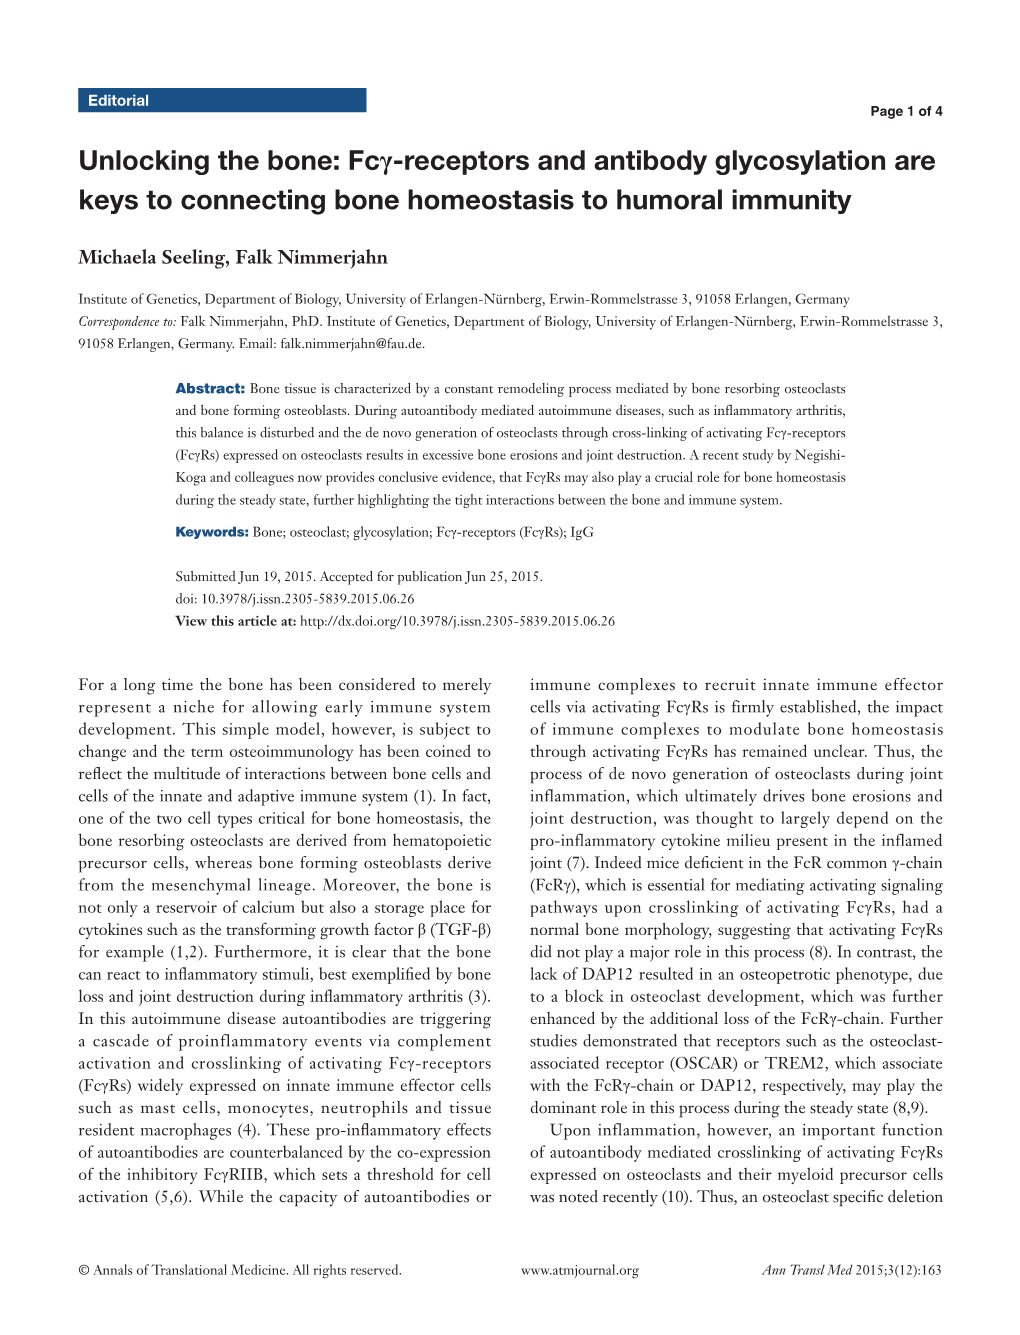 Fcγ-Receptors and Antibody Glycosylation Are Keys to Connecting Bone Homeostasis to Humoral Immunity